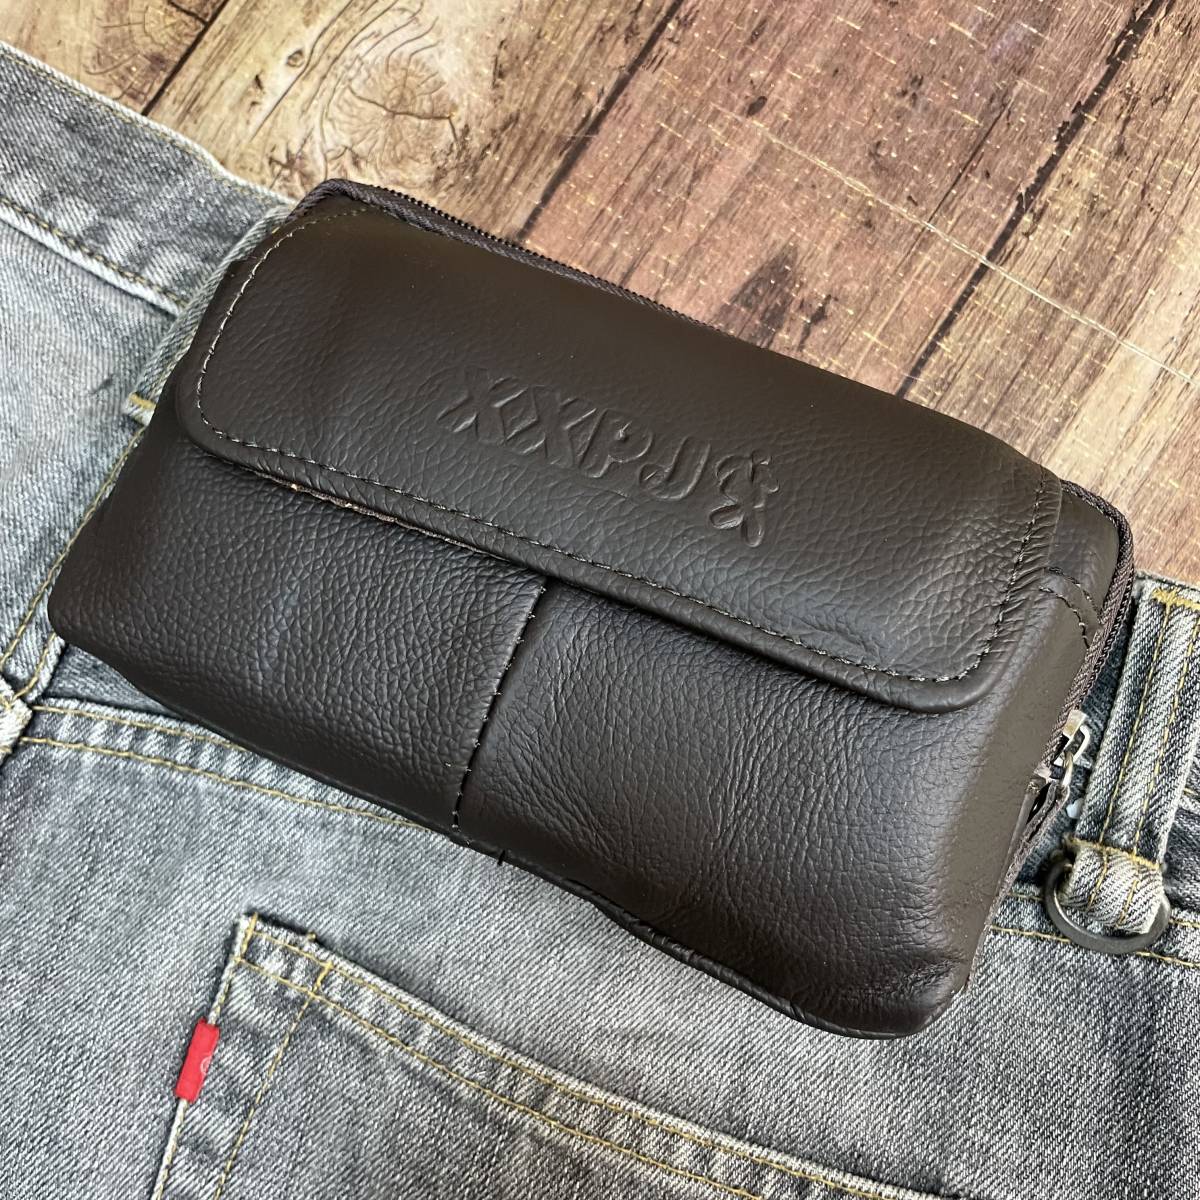  new goods original leather waist bag belt pouch mobile telephone smartphone bag iPhone bag digital camera camera case dark brown free shipping 